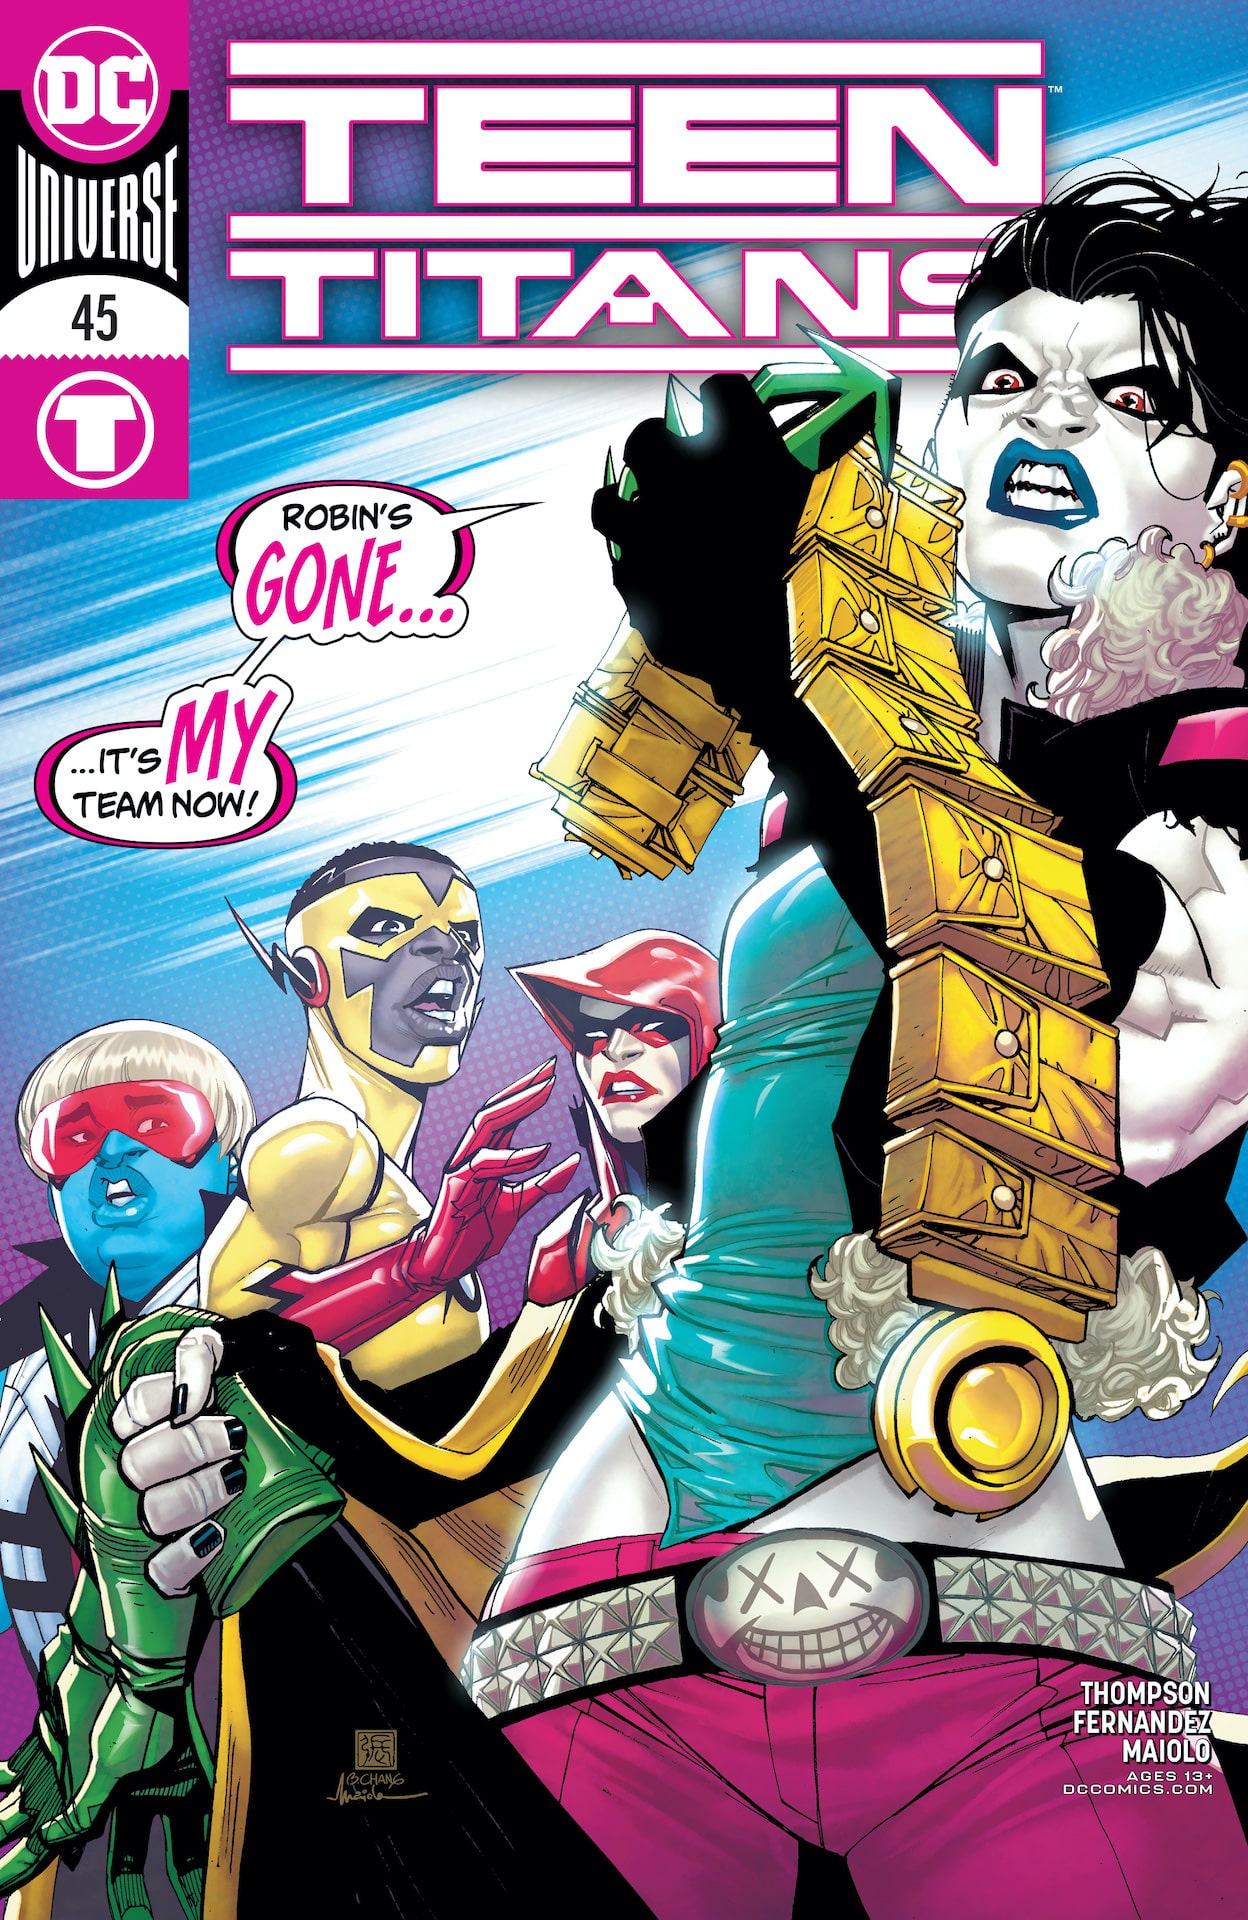 DC Preview: Teen Titans #45